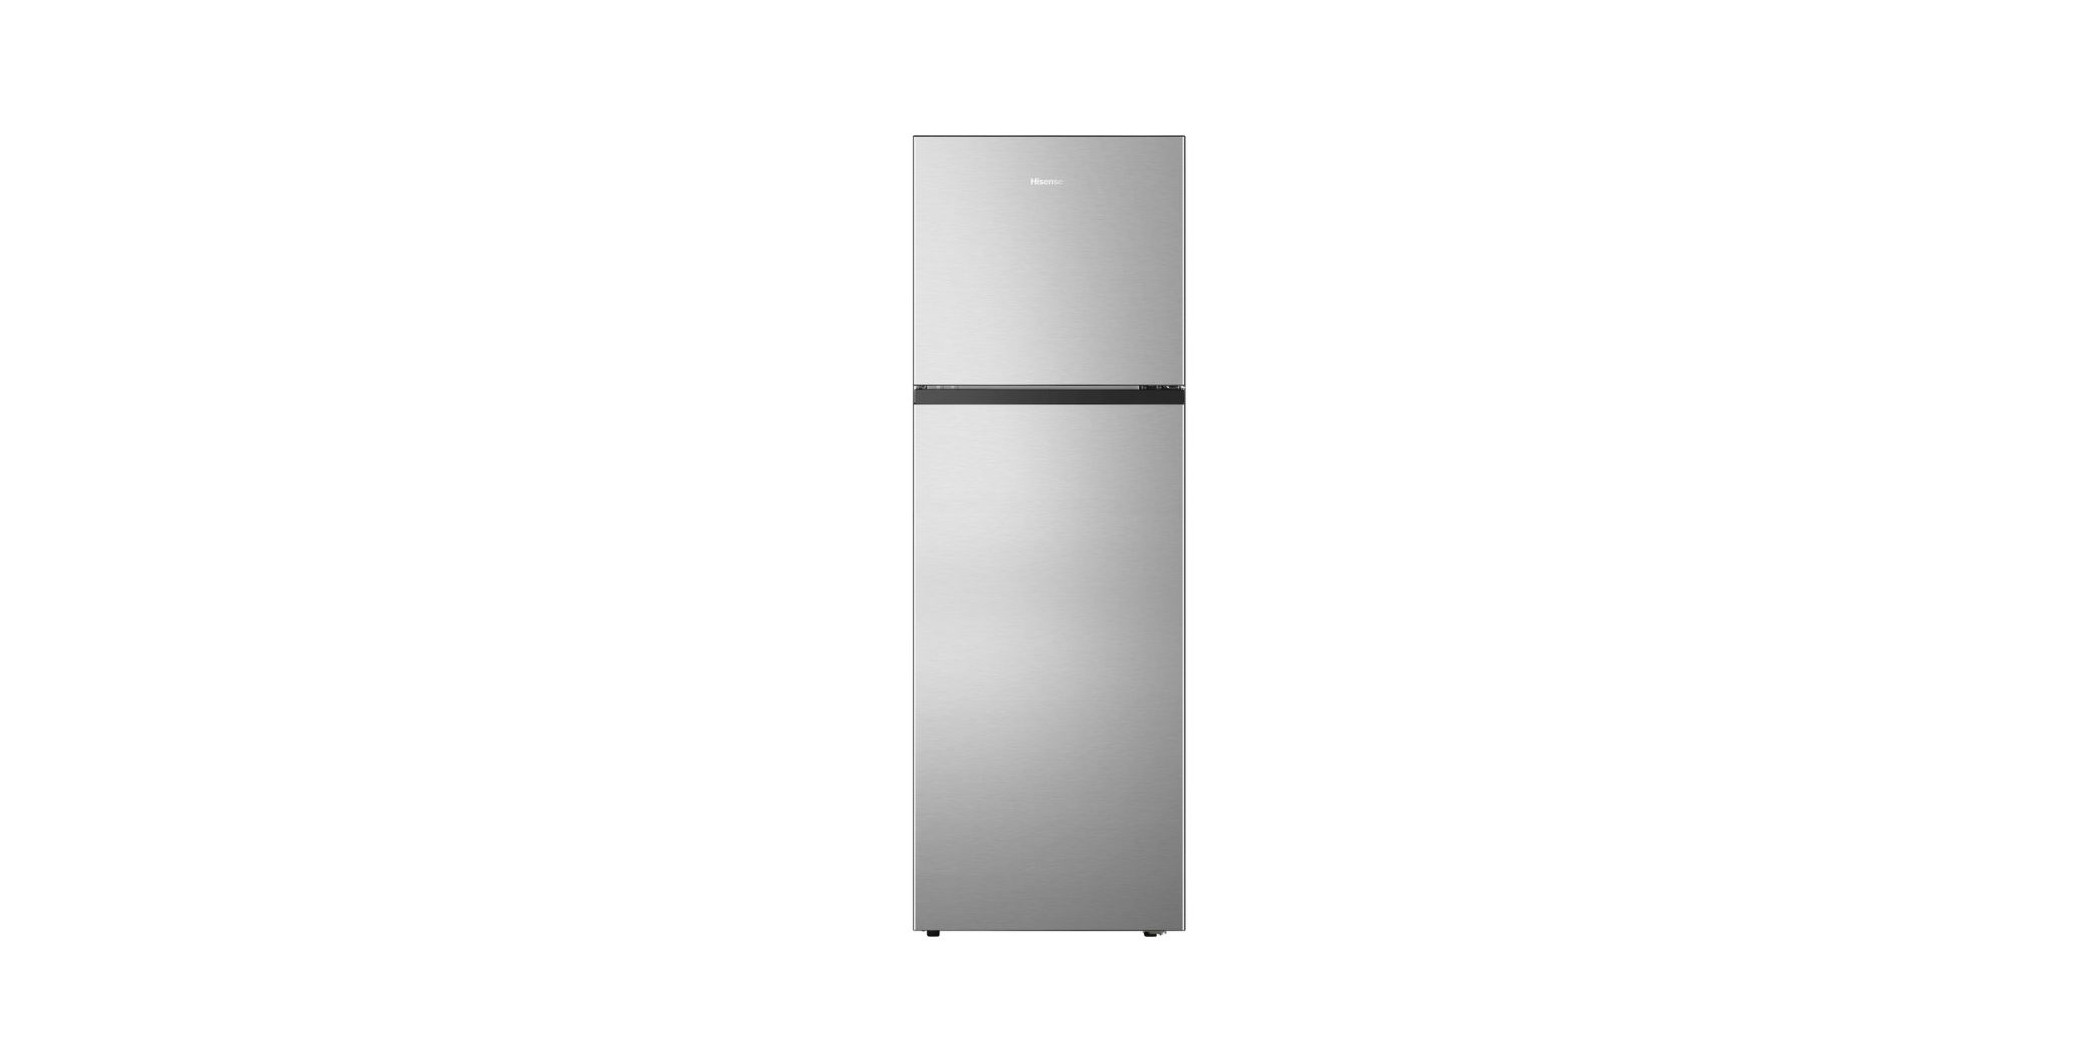 Hisense H321TI Refrigerator